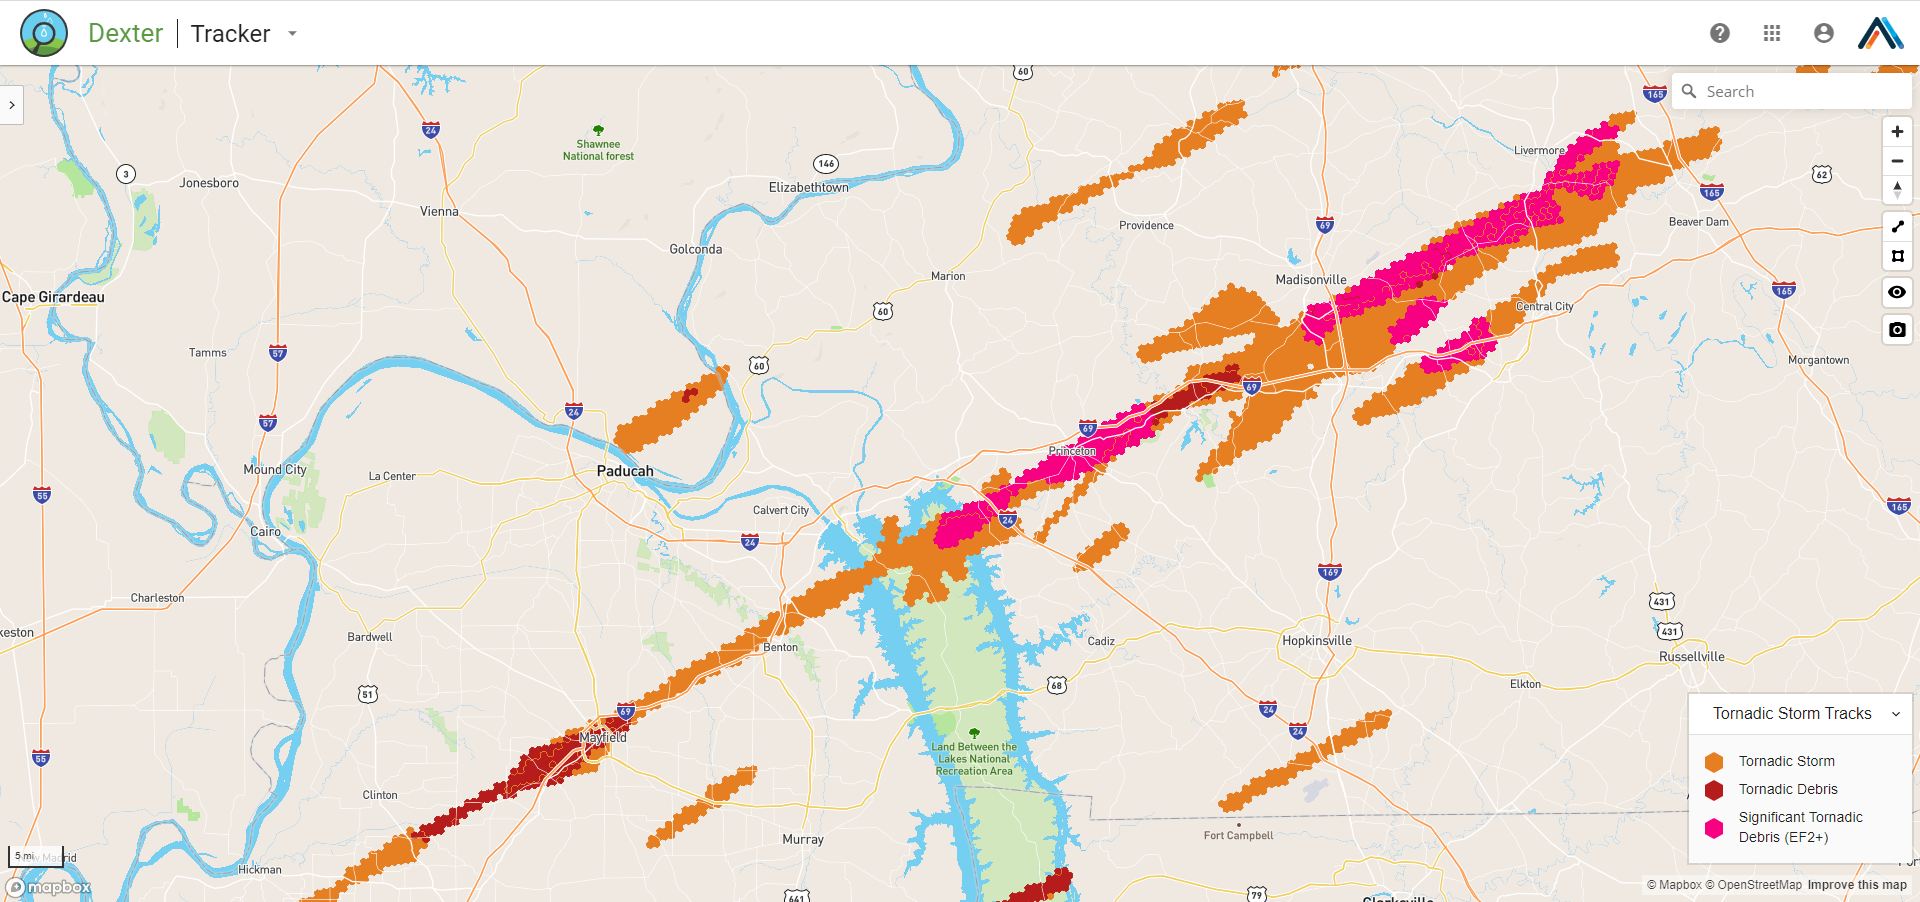 Mayfield Madisonville Kentucky tornado EF2+ damage map